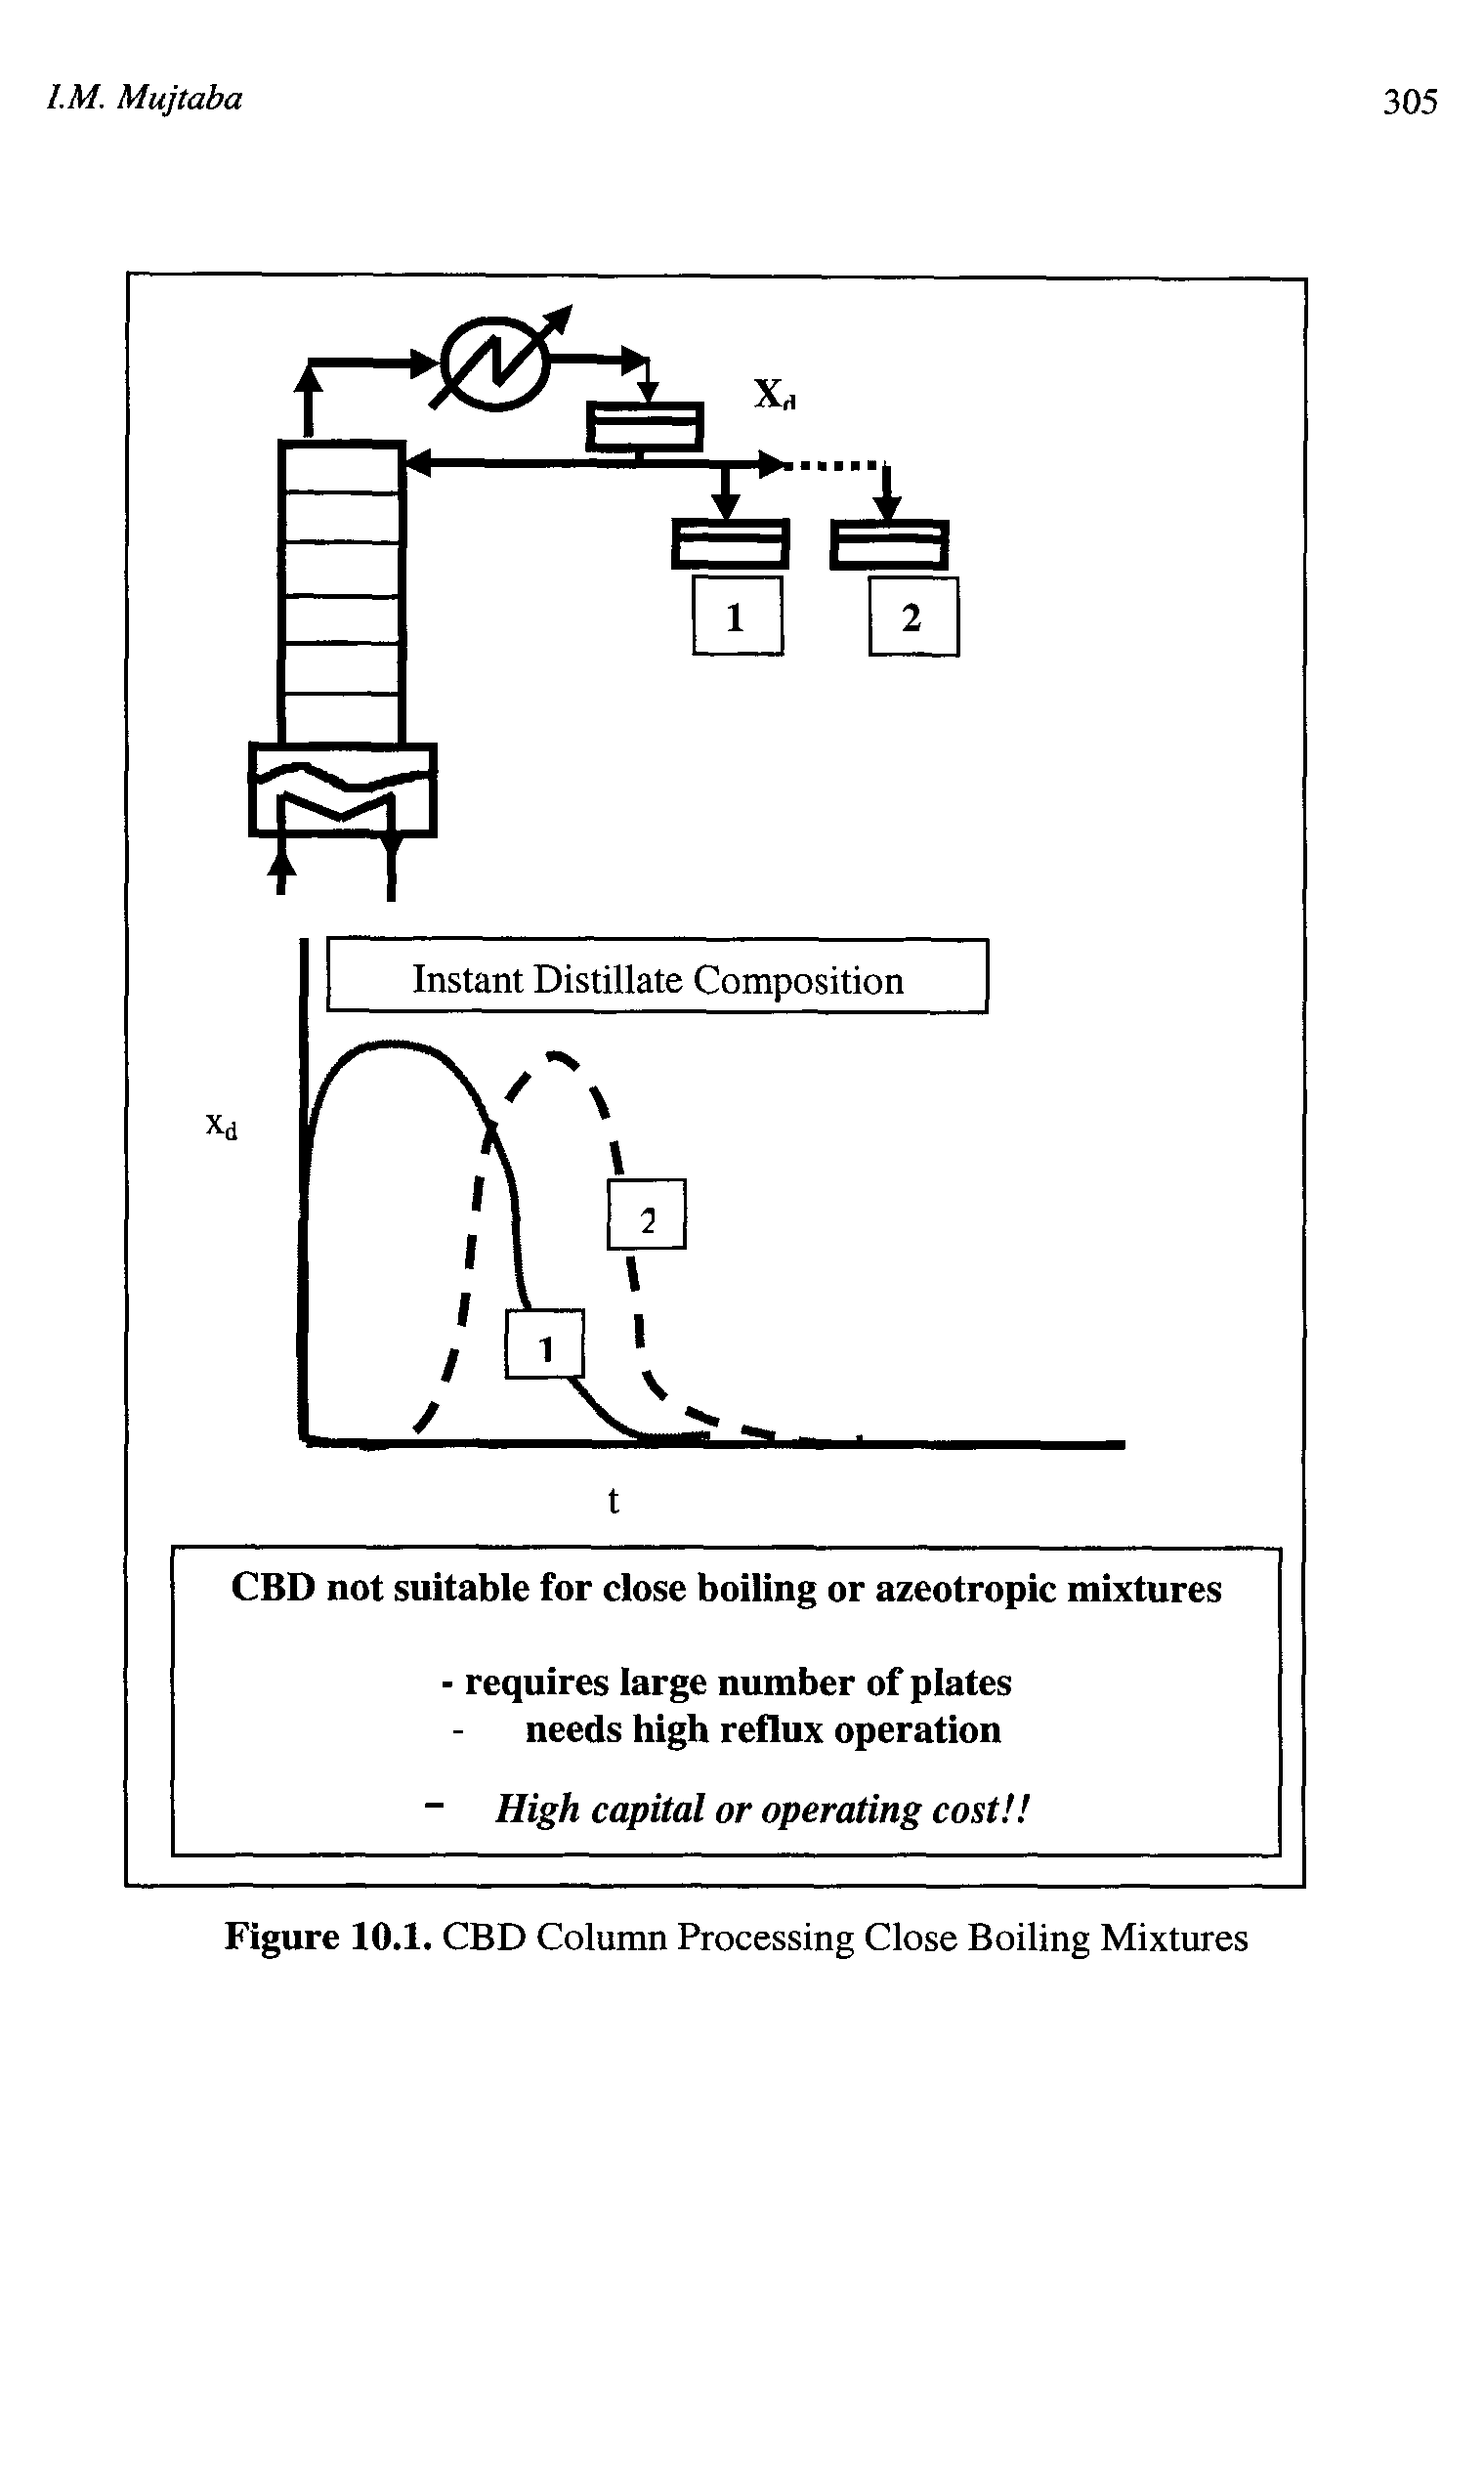 Figure 10.1. CBD Column Processing Close Boiling Mixtures...